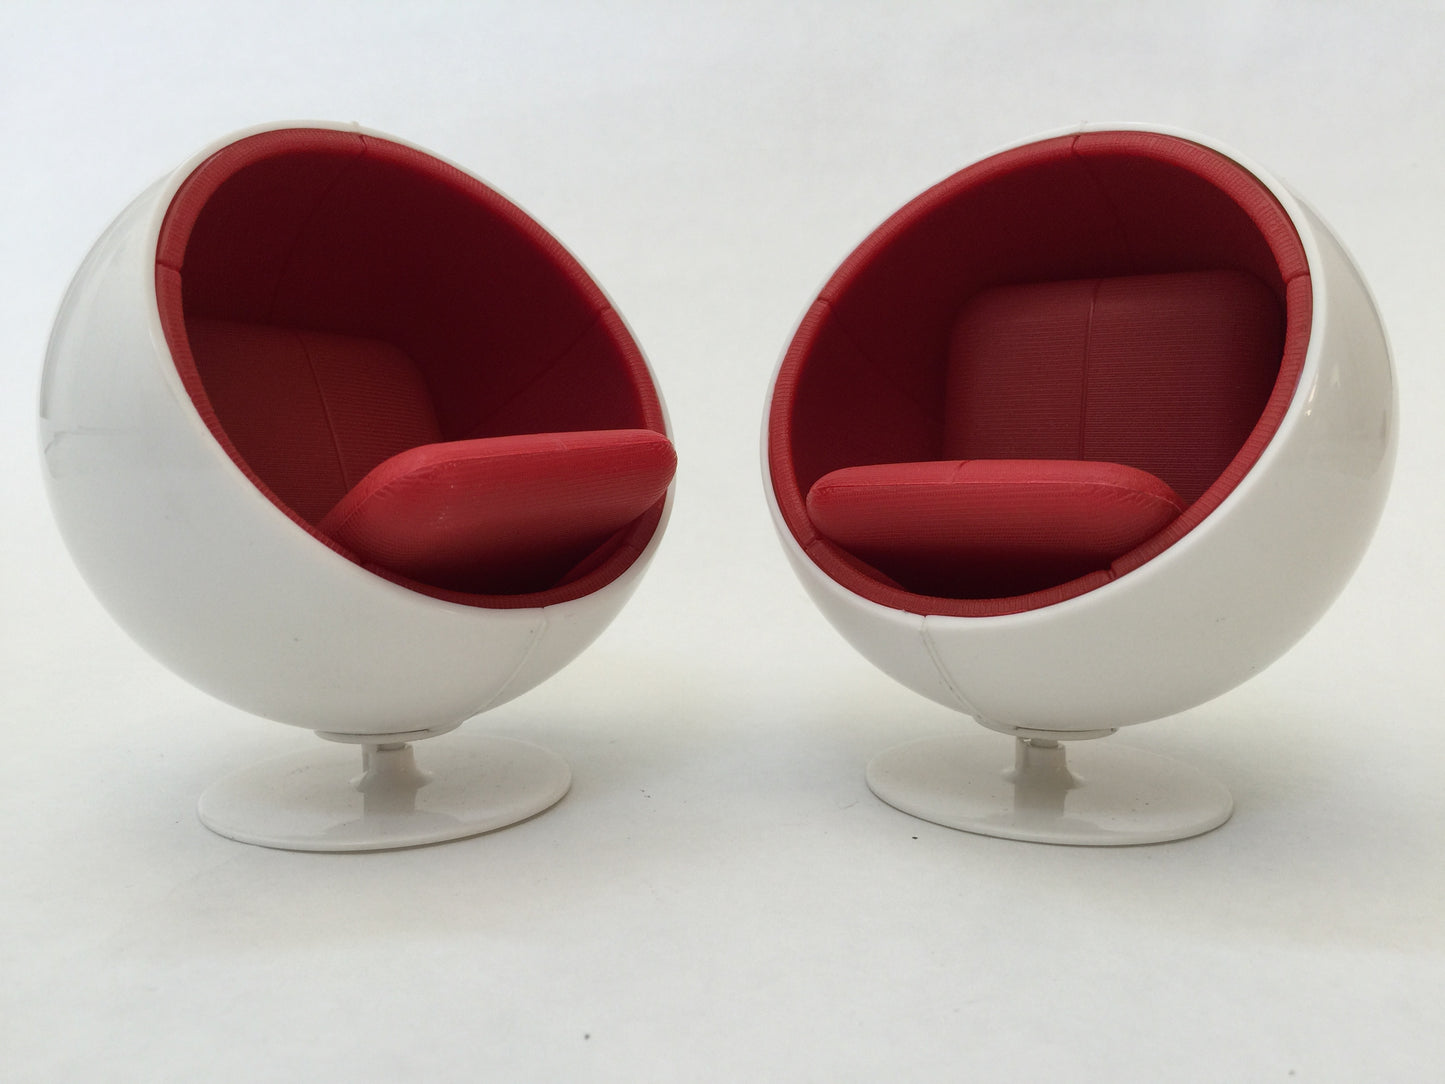 75135 Ball Chair-WHITE/RED-1